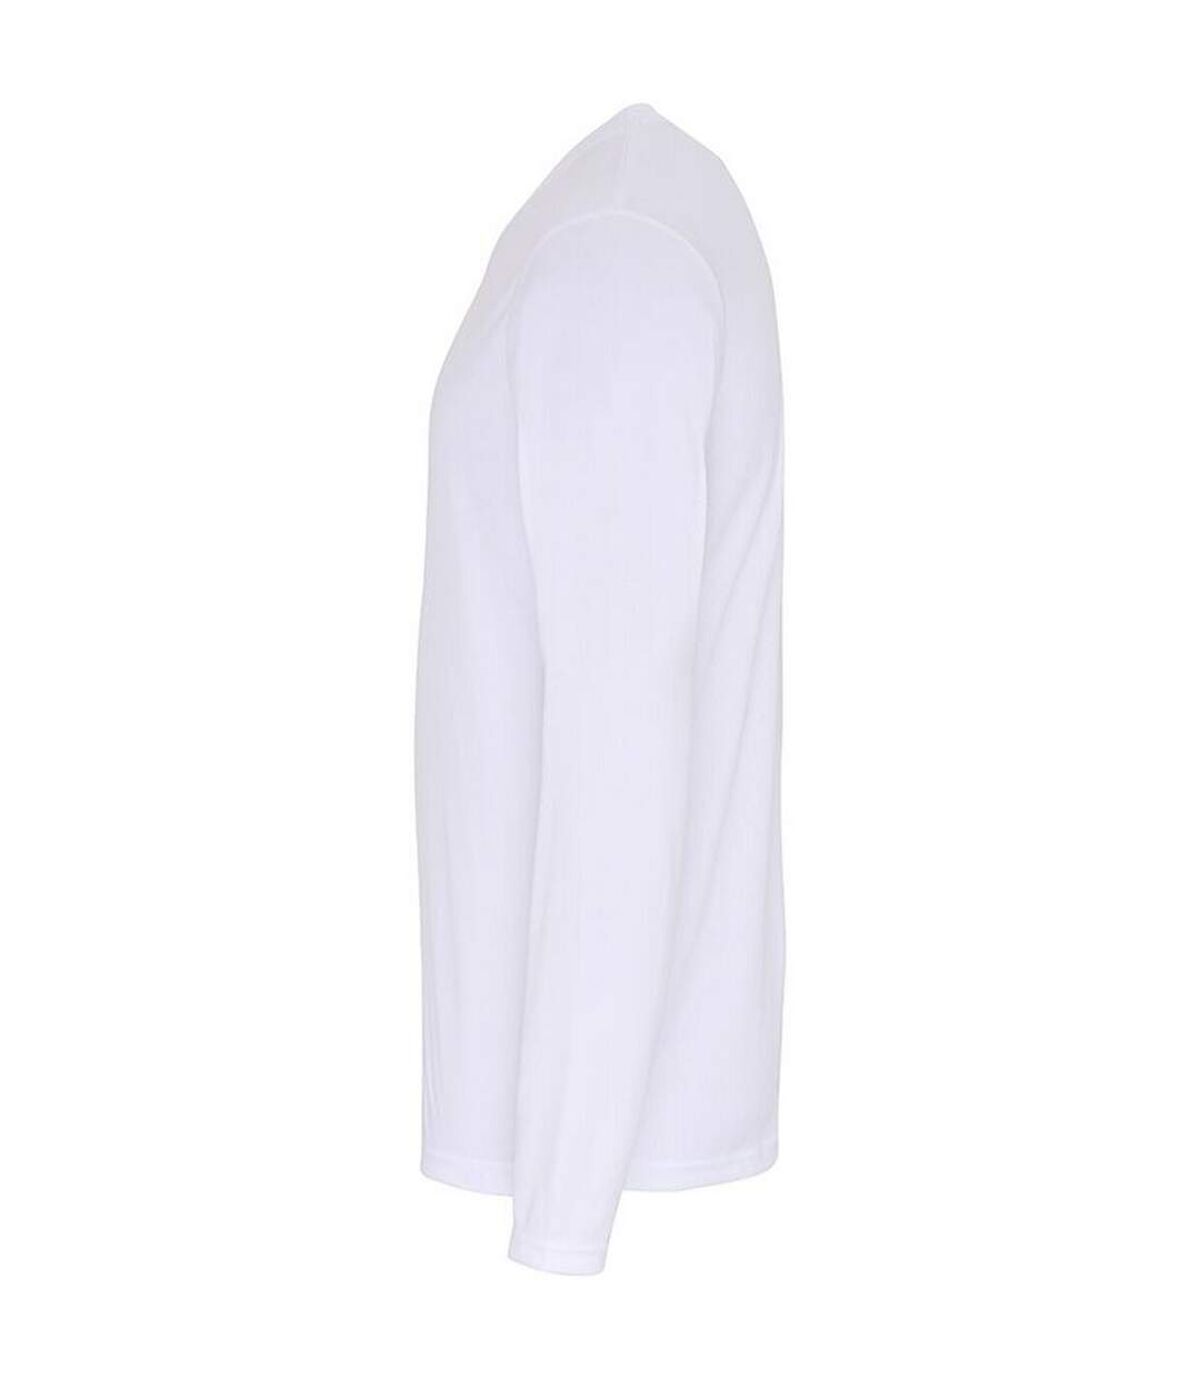 TriDri Mens Long Sleeve Performance T-Shirt (White) - UTRW6543